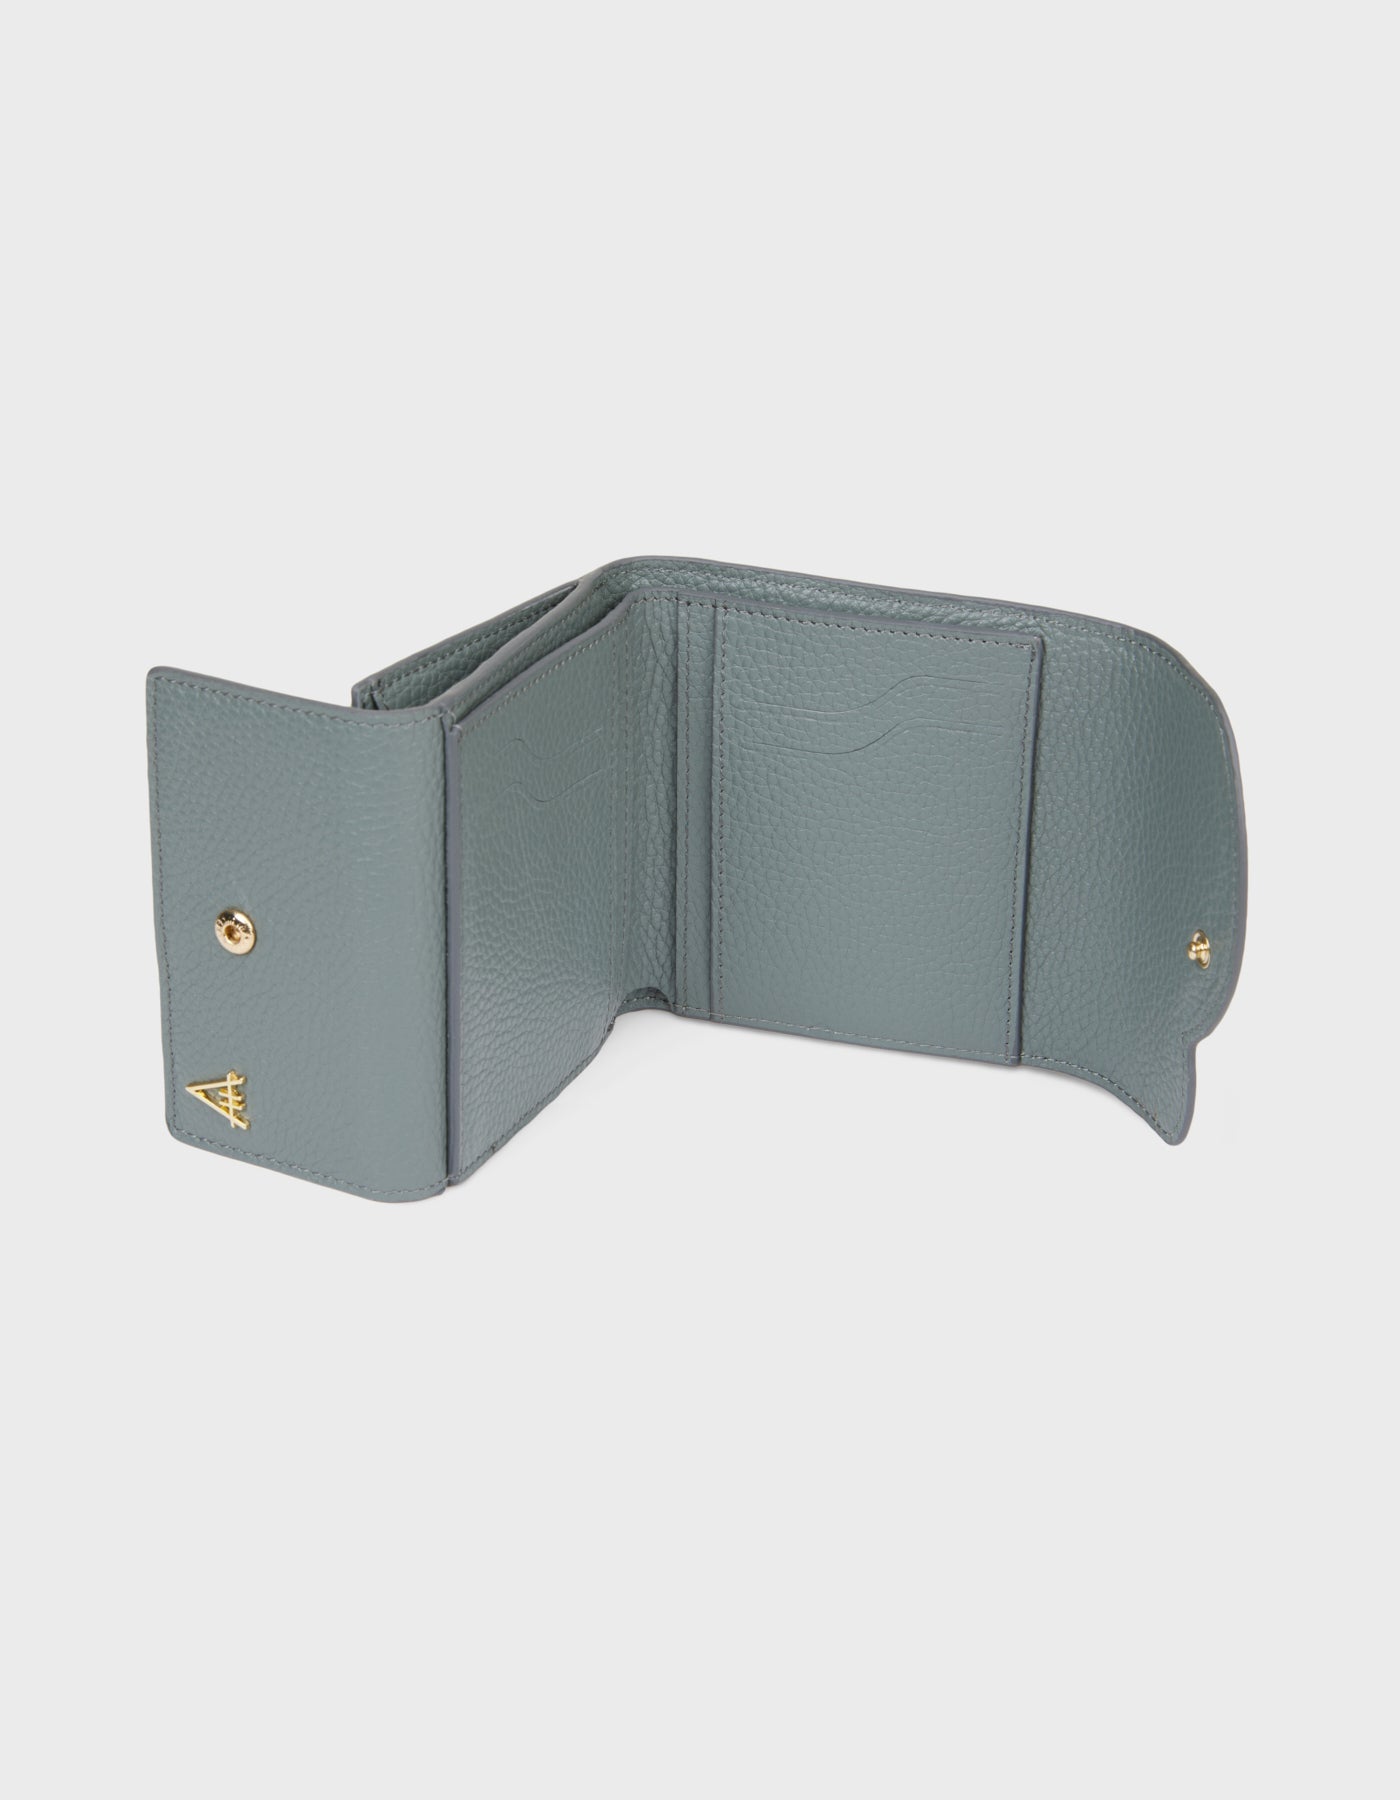 HiVa Atelier | Larus Compact Wallet Dusty Blue | Beautiful and Versatile